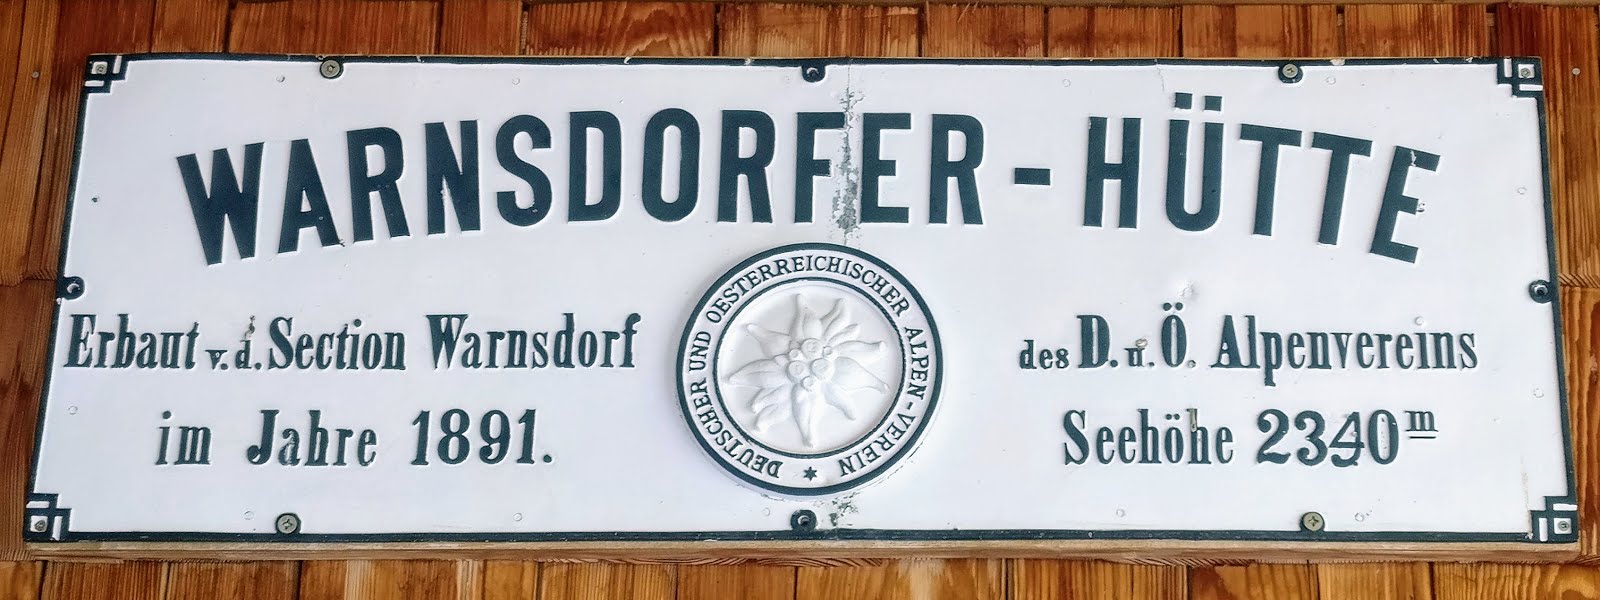 2019 Warnsdorfer hutte